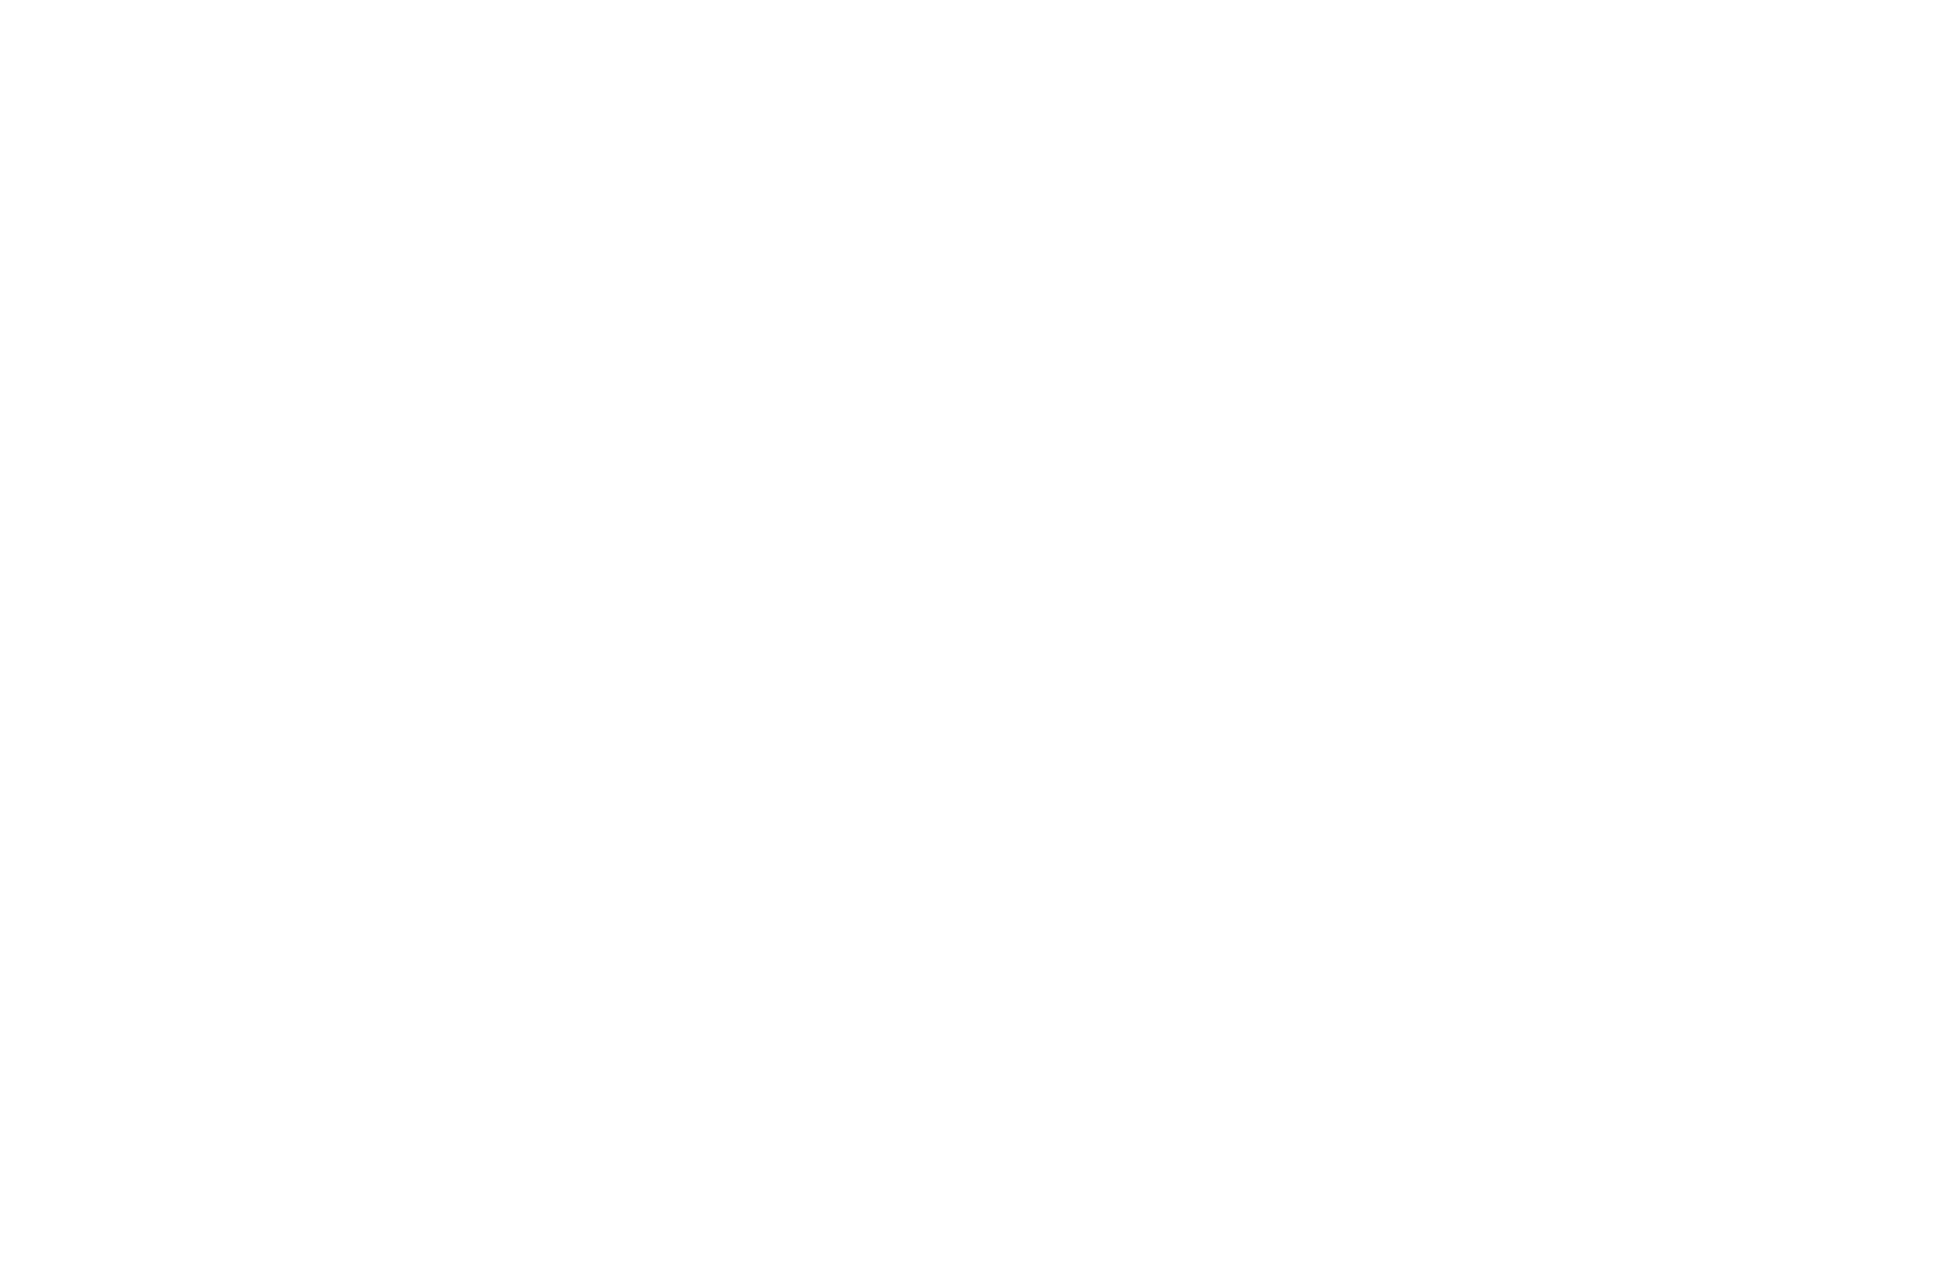 Best Experimental Film